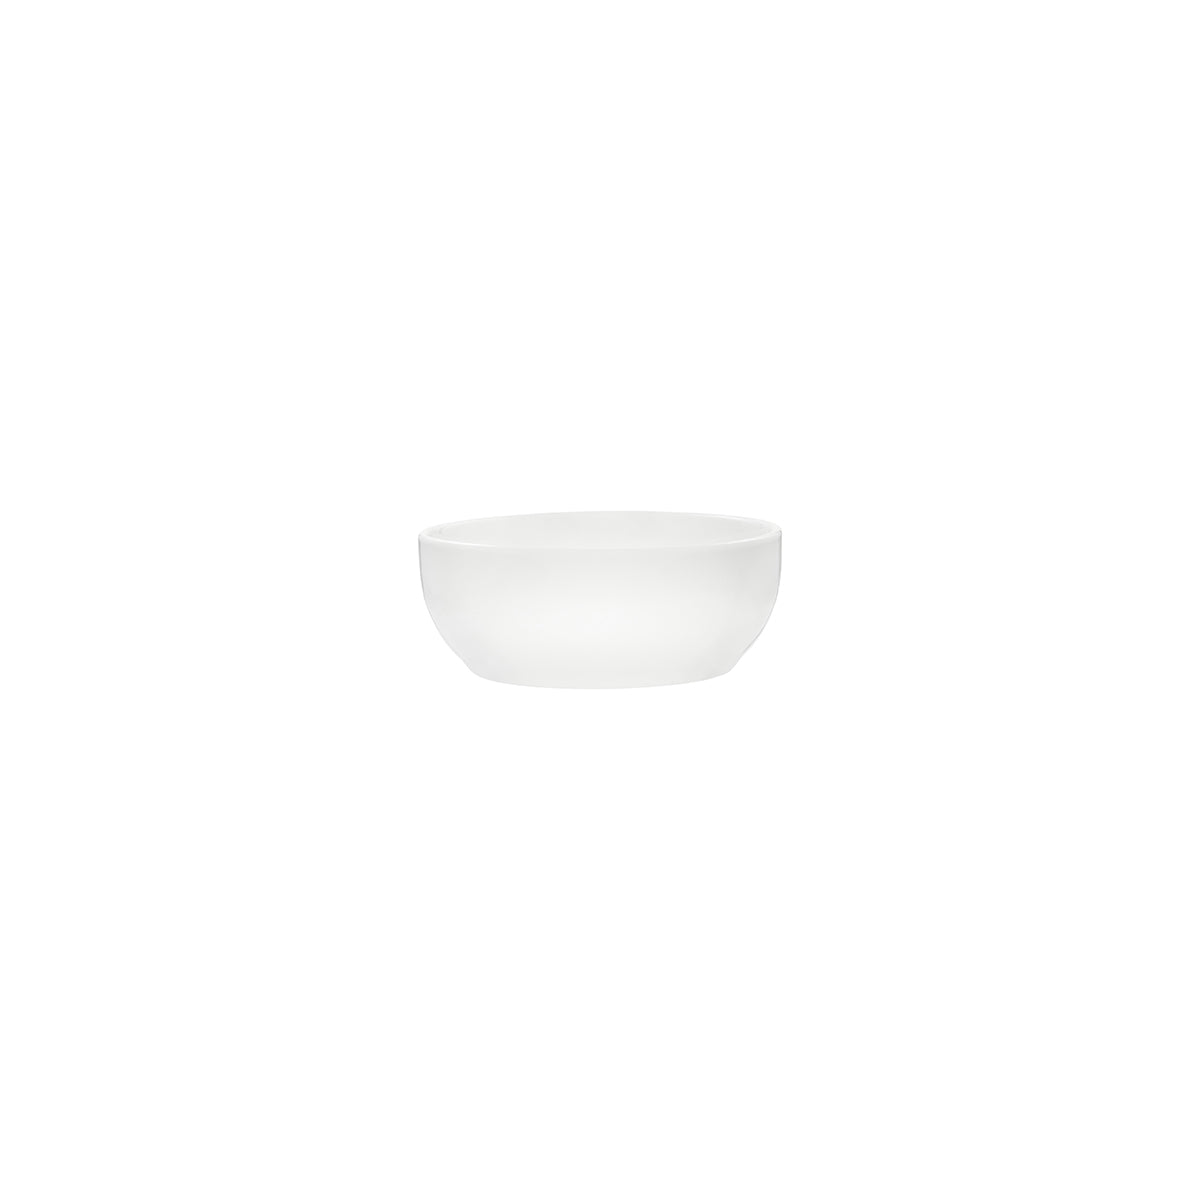 92035 Tablekraft Core White Round Condiment Bowl 90mm Tomkin Australia Hospitality Supplies